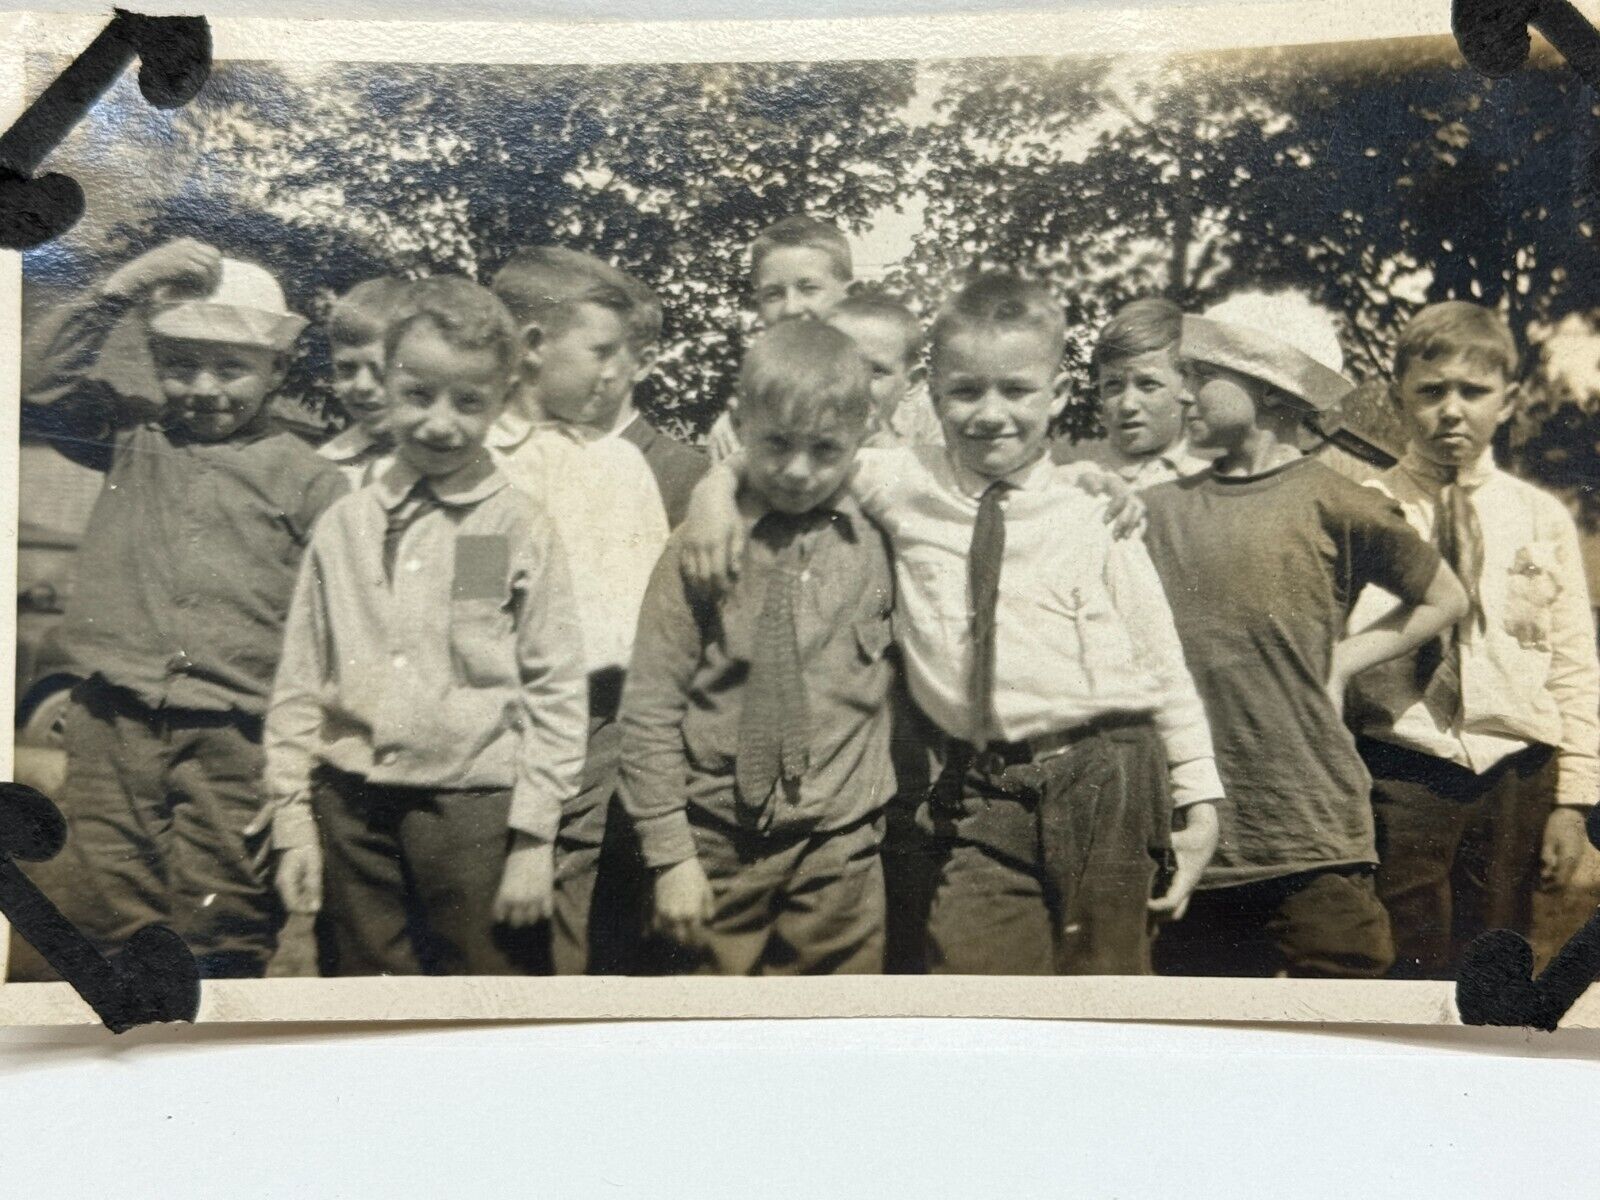 1N Photograph School Class Photo Boys Rascals Portrait 1920's